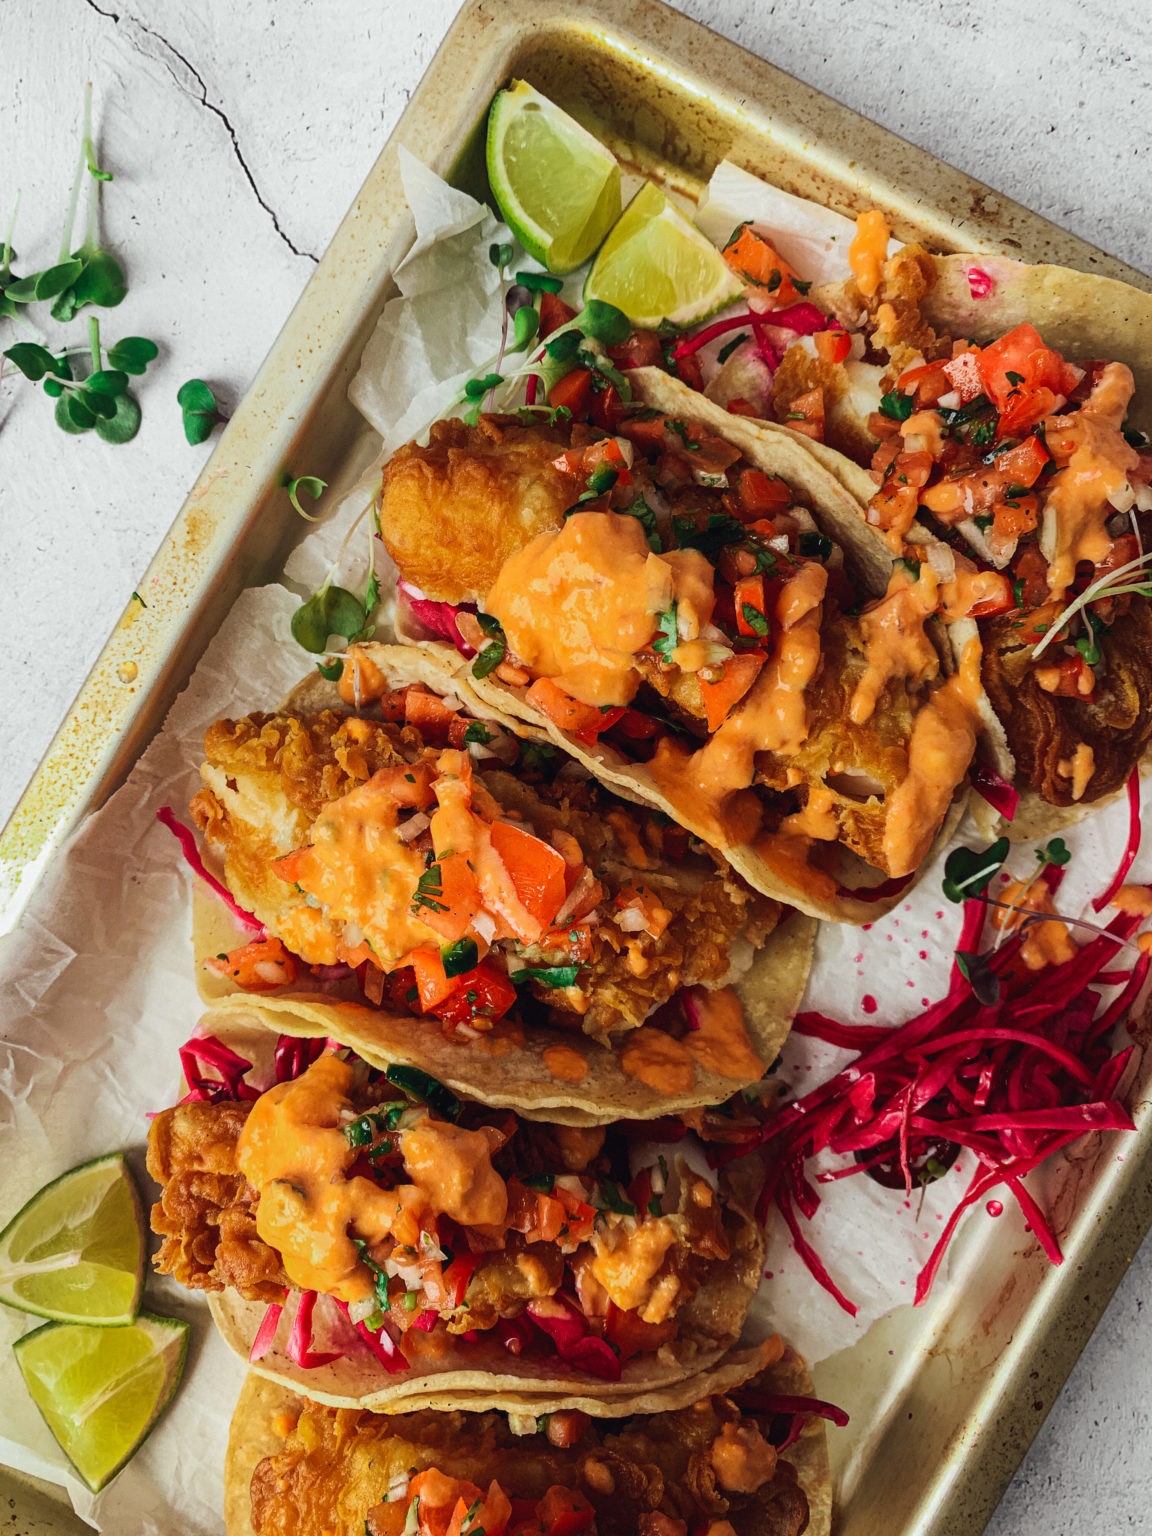 Baja fish tacos - thecommunalfeast.com